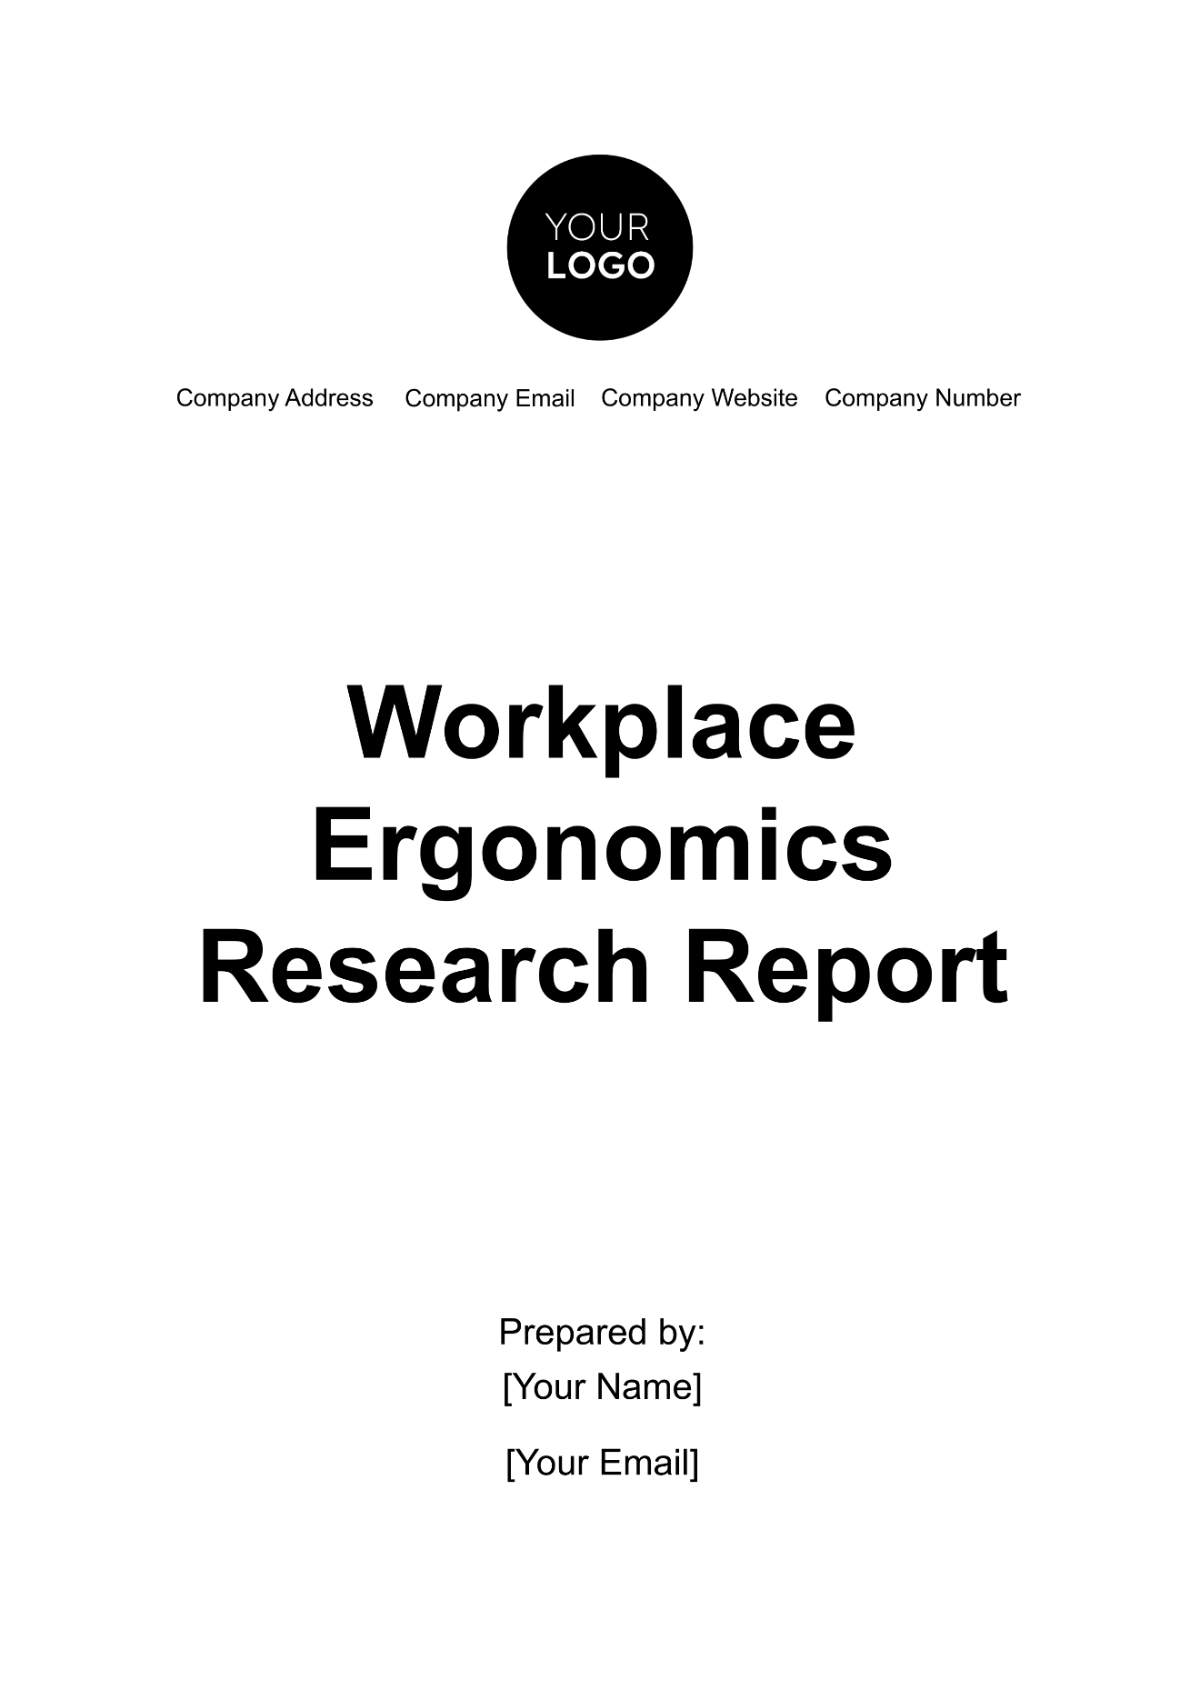 Free Workplace Ergonomics Research Report Template